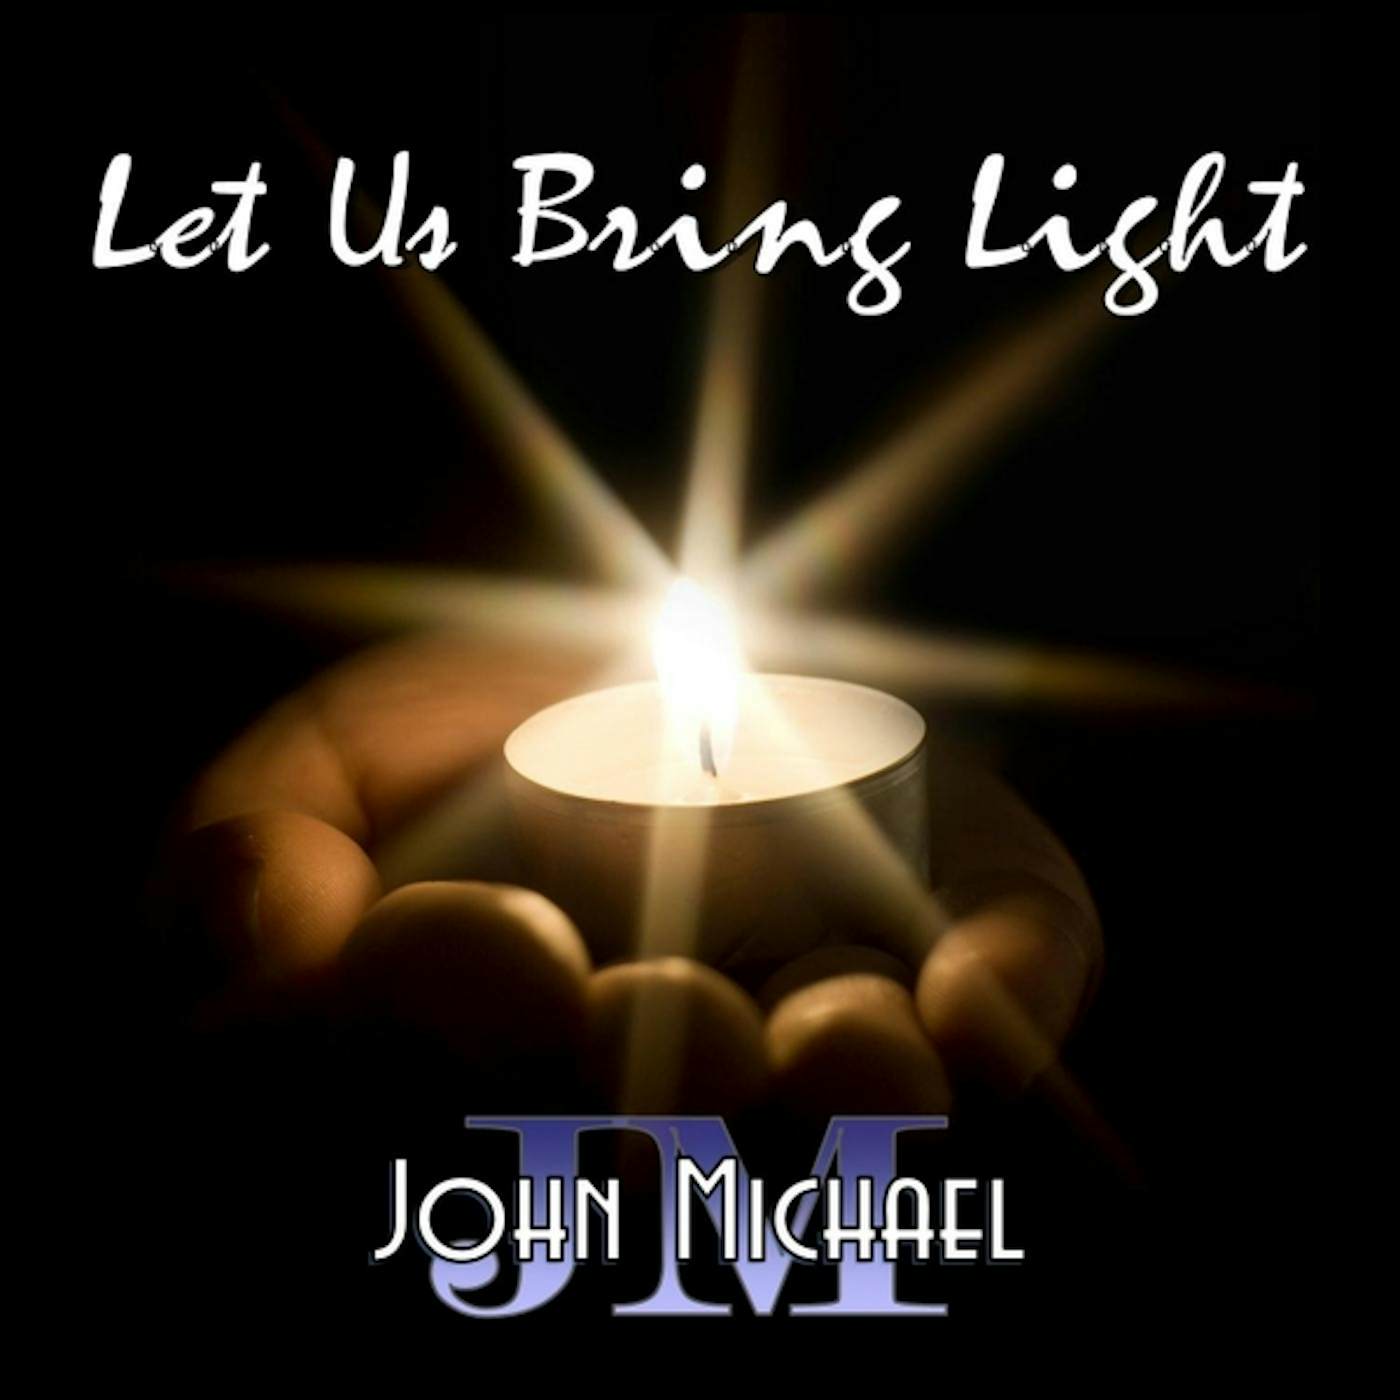 John Michael LET US BRING LIGHT CD